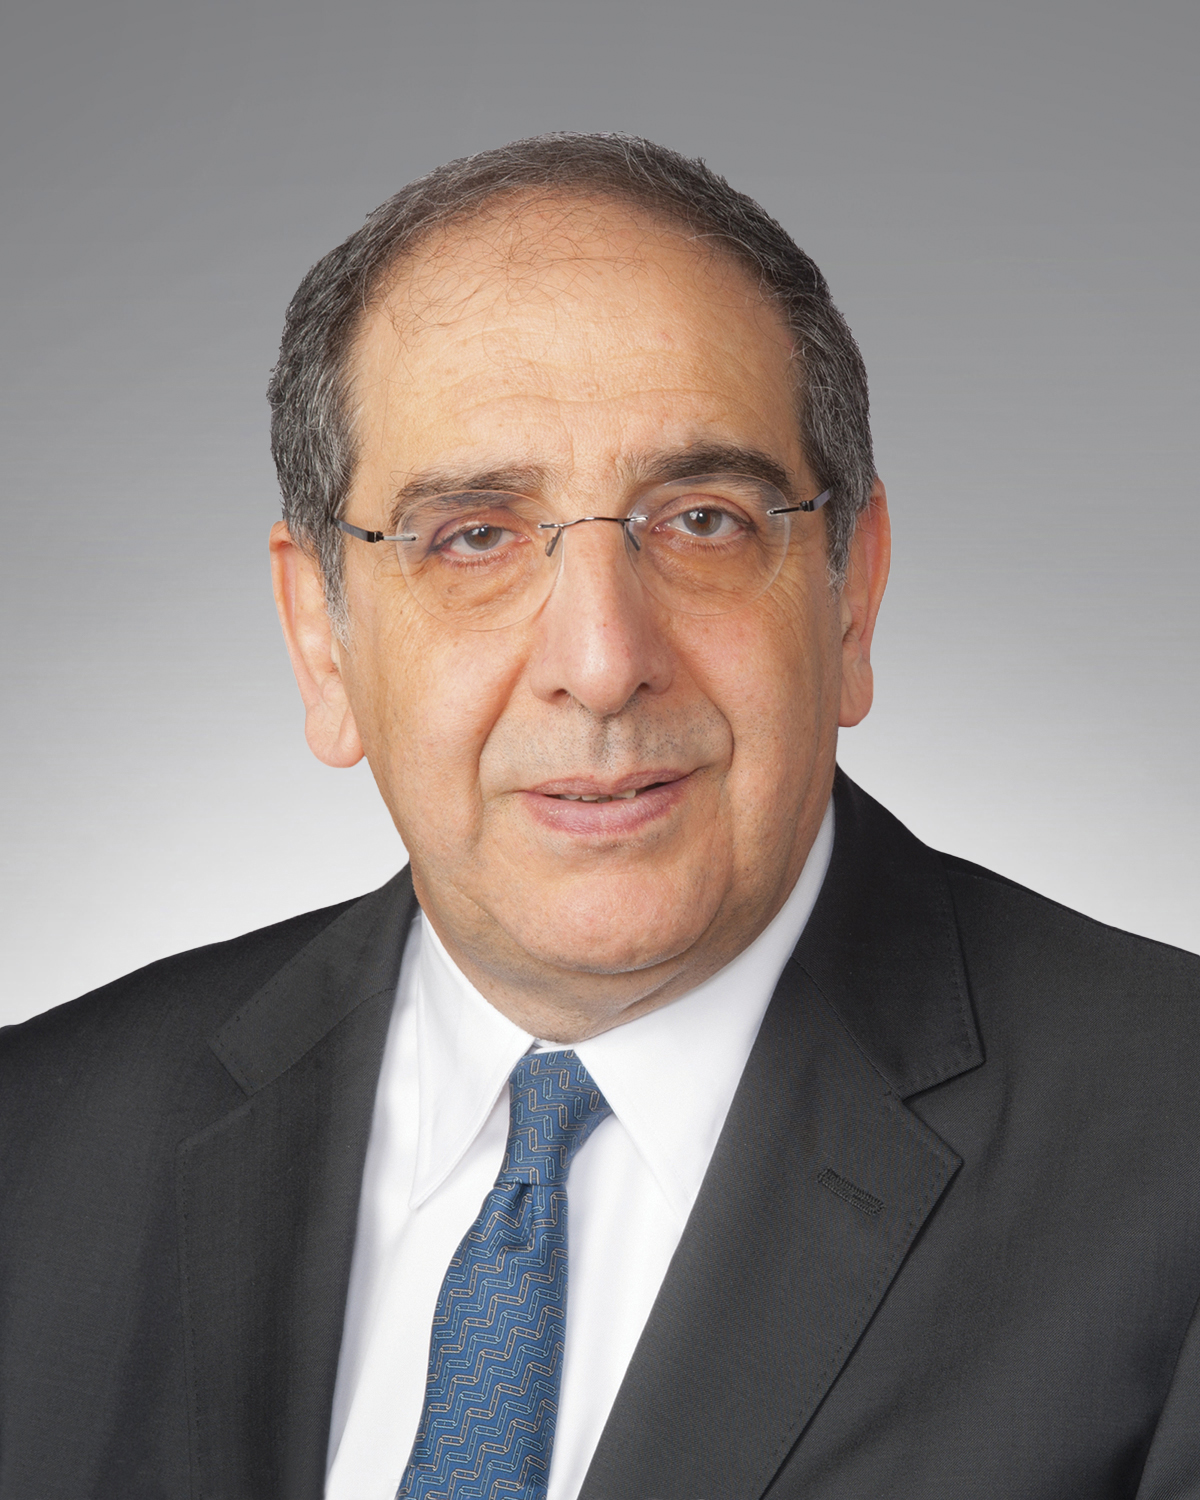 Jose’ Alain Sahel, MD